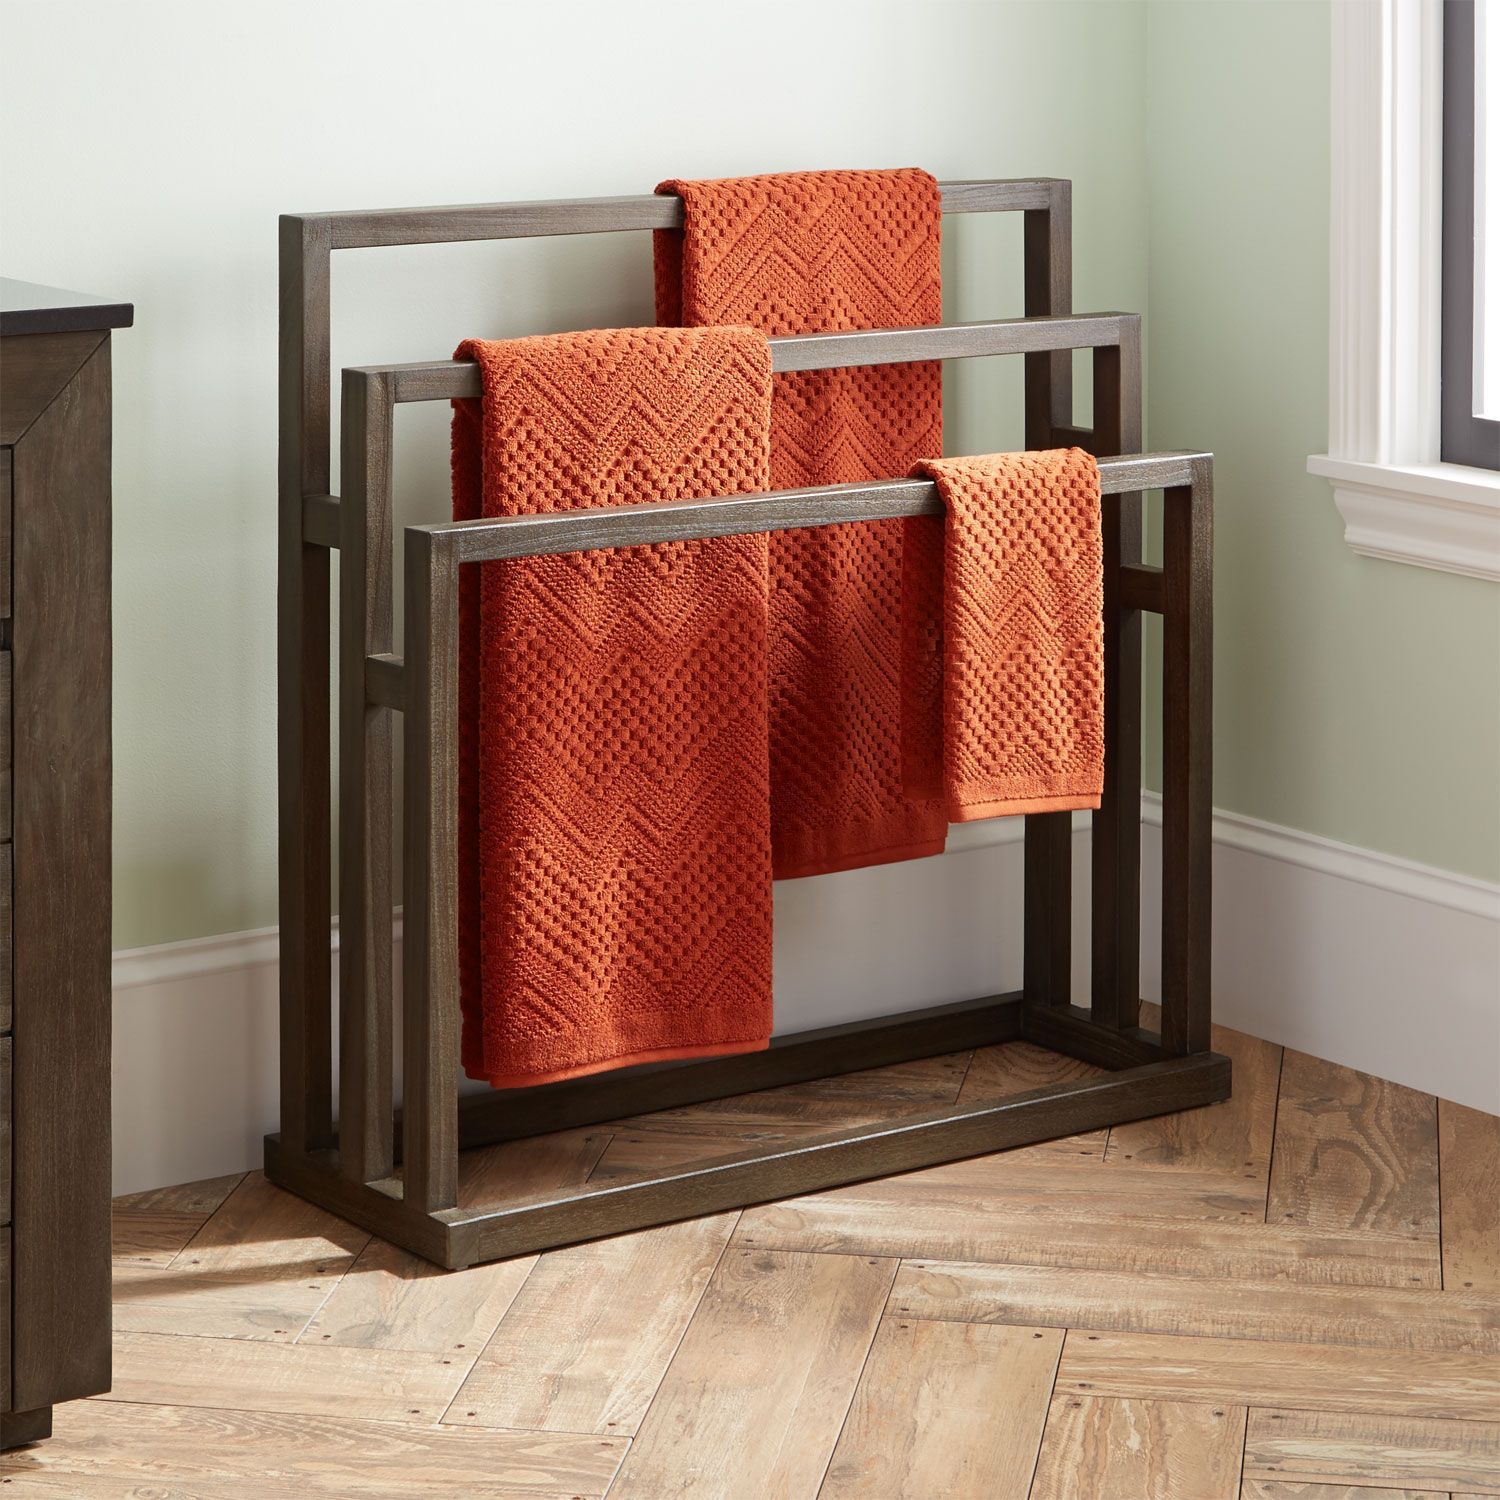 18 home accessories Wood towel racks
 ideas